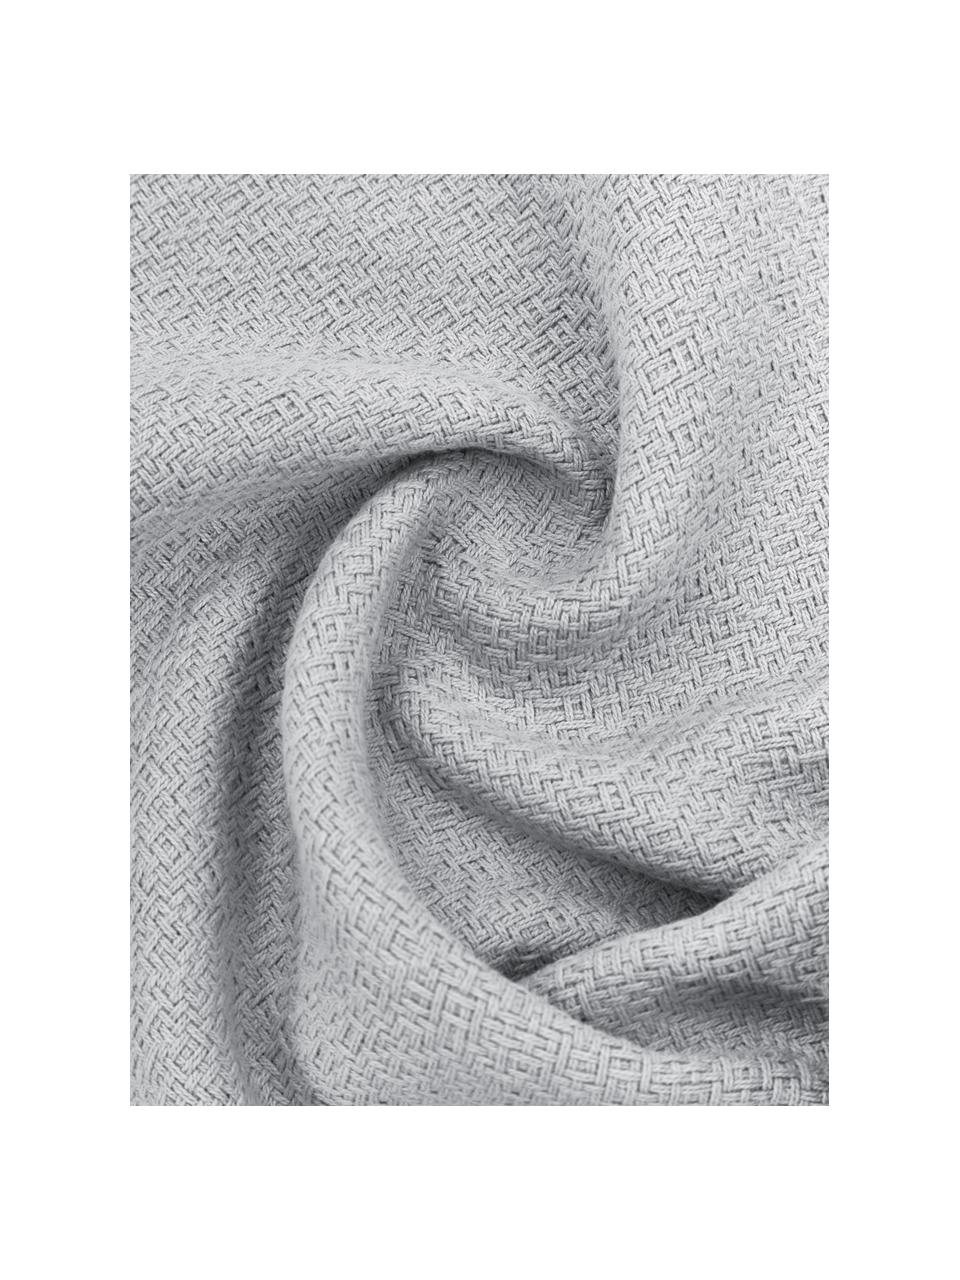 Federa arredo color grigio chiaro con frange decorative Lorel, 100% cotone, Grigio, Larg. 40 x Lung. 40 cm